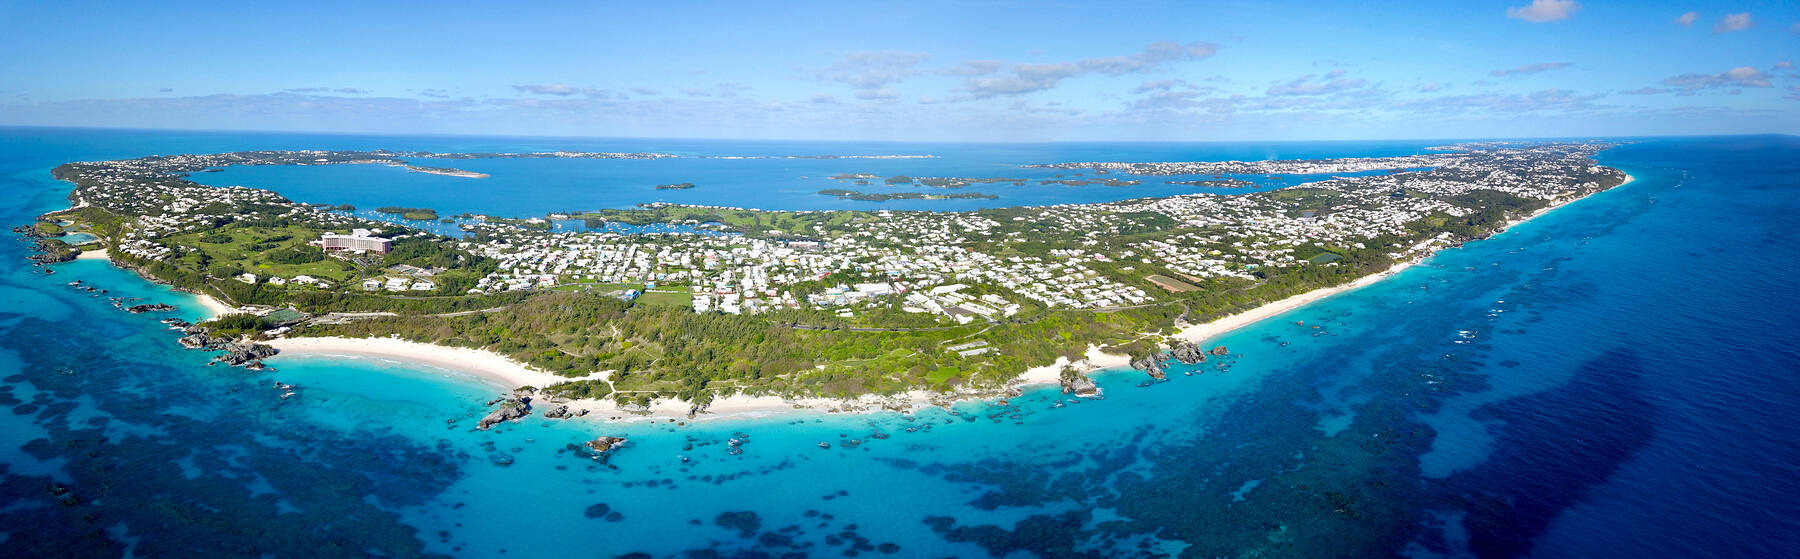 5 Reasons to travel to Bermuda